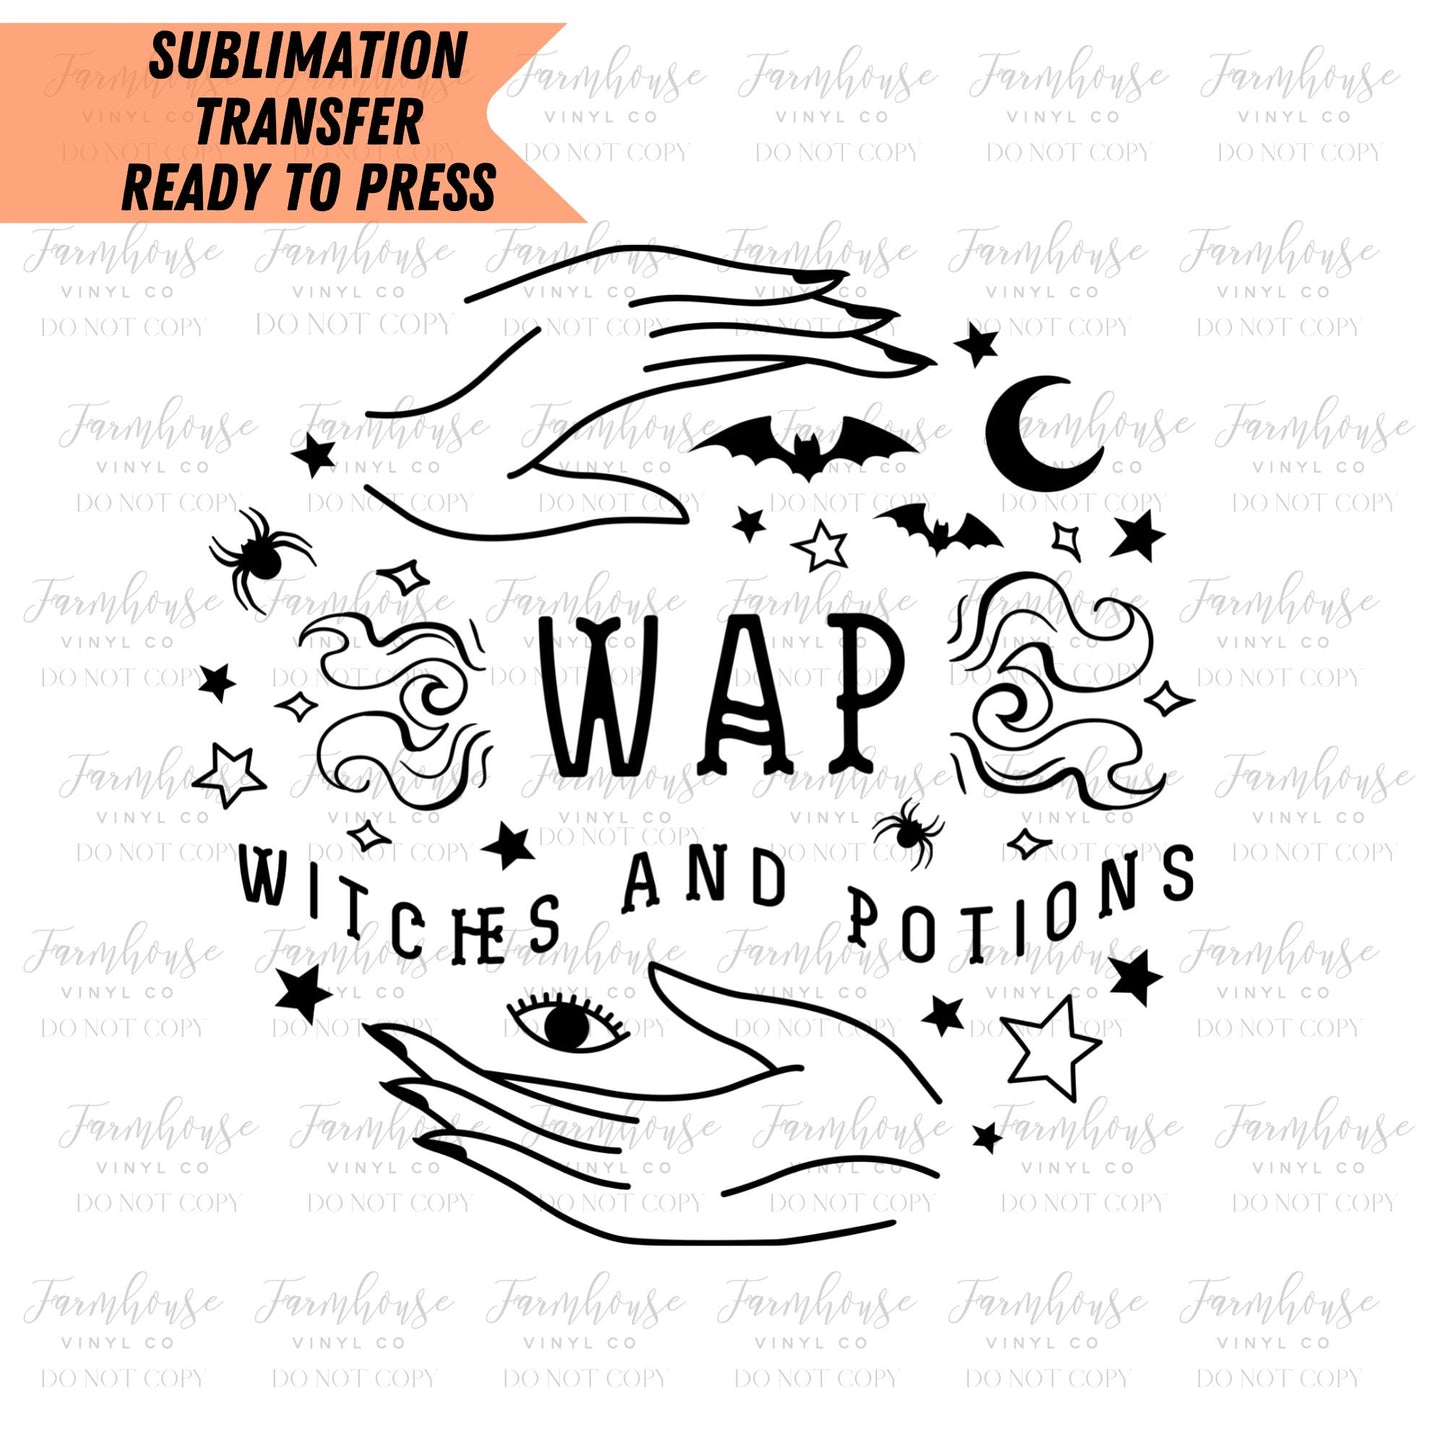 WAP Witches & Potions Halloween Ready To Press Sublimation Transfer - Farmhouse Vinyl Co